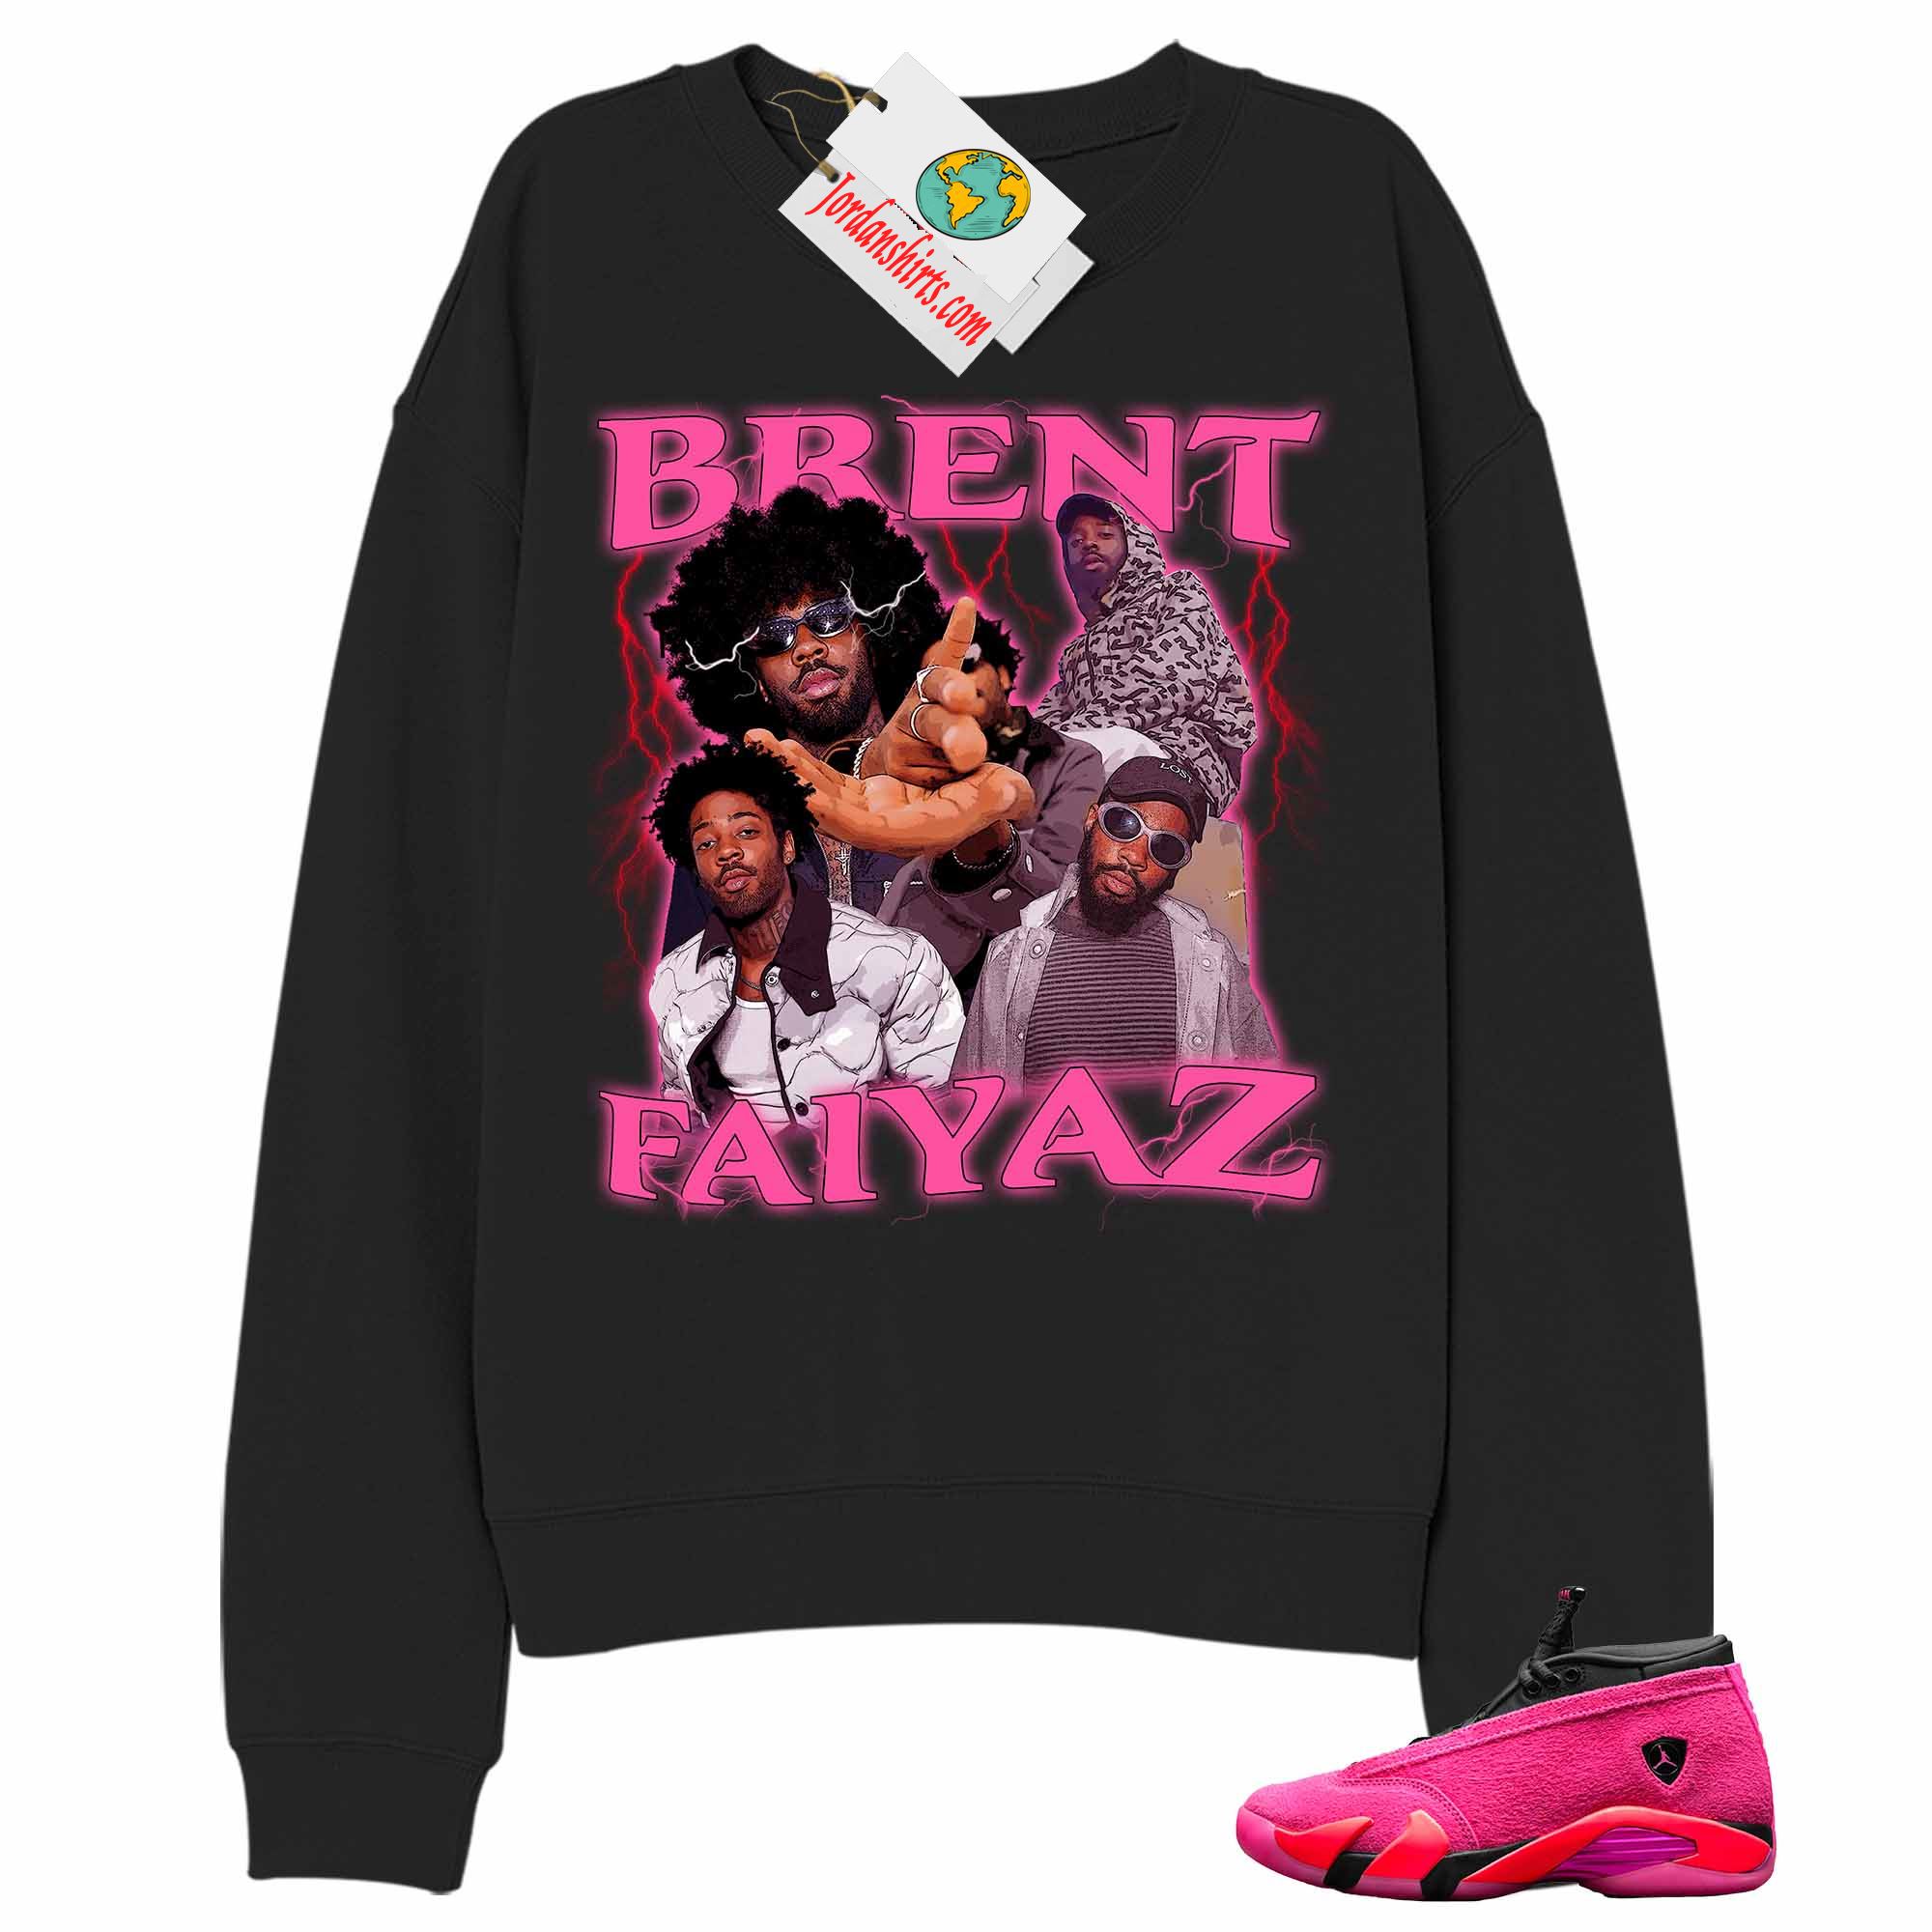 Jordan 14 Sweatshirt, Brent Faiyaz Retro Vintage 90s Hip Hop Raptees Black Sweatshirt Air Jordan 14 Wmns Shocking Pink 14s Plus Size Up To 5xl